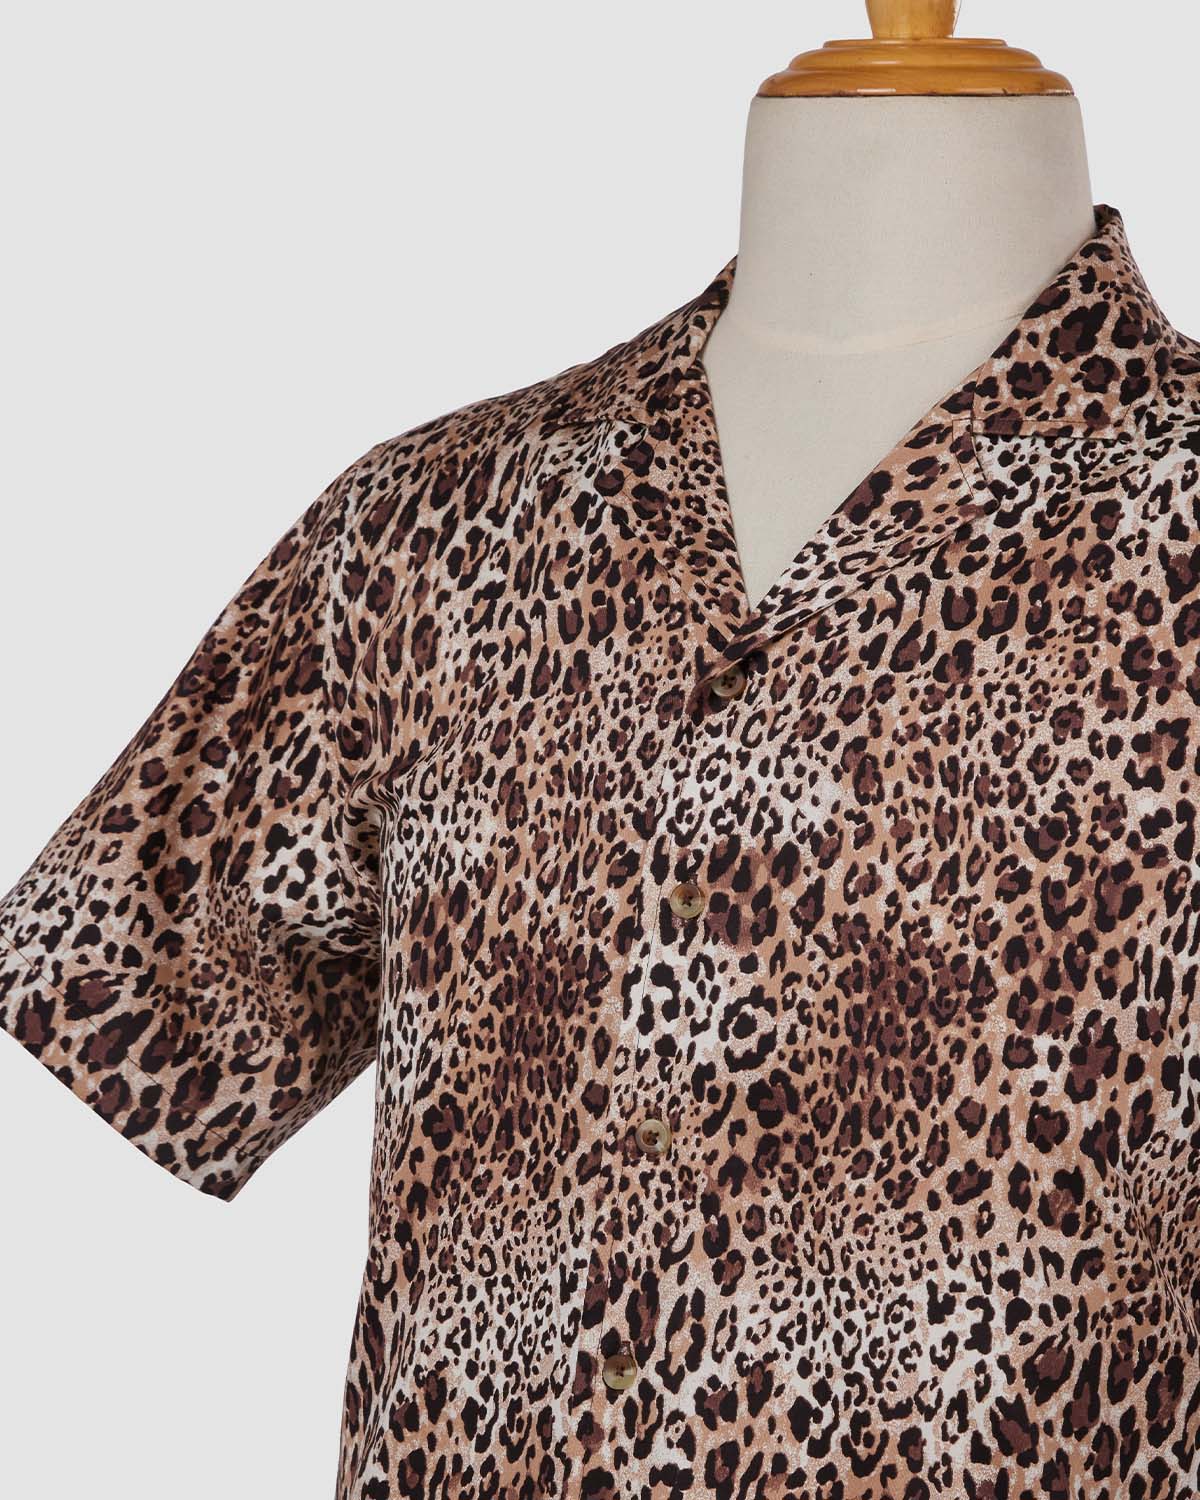 Bombay Shirt Company - Spotted Safari Shirt